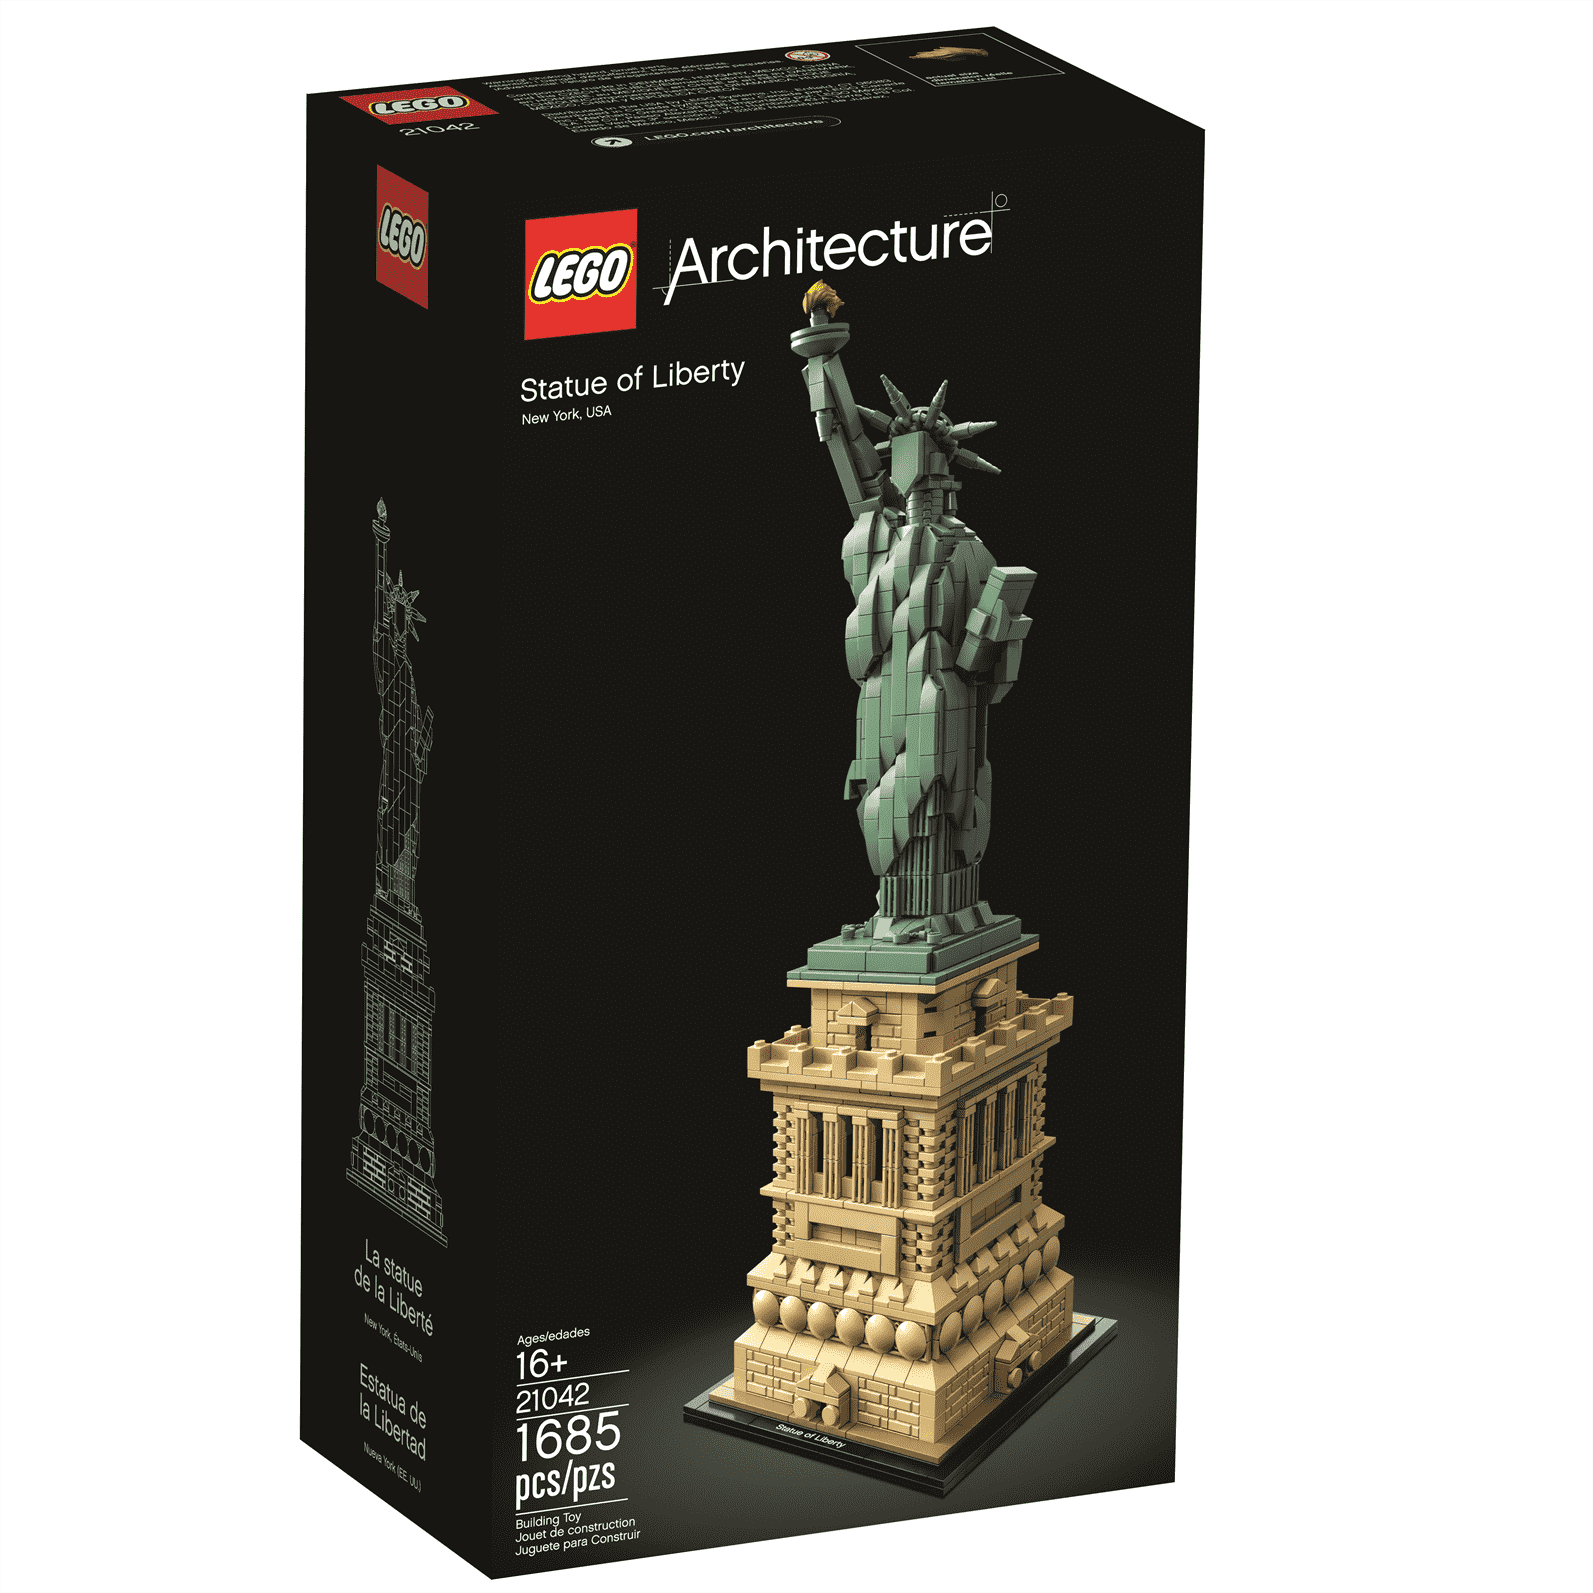 LEGO: Architecture - Statue of Liberty